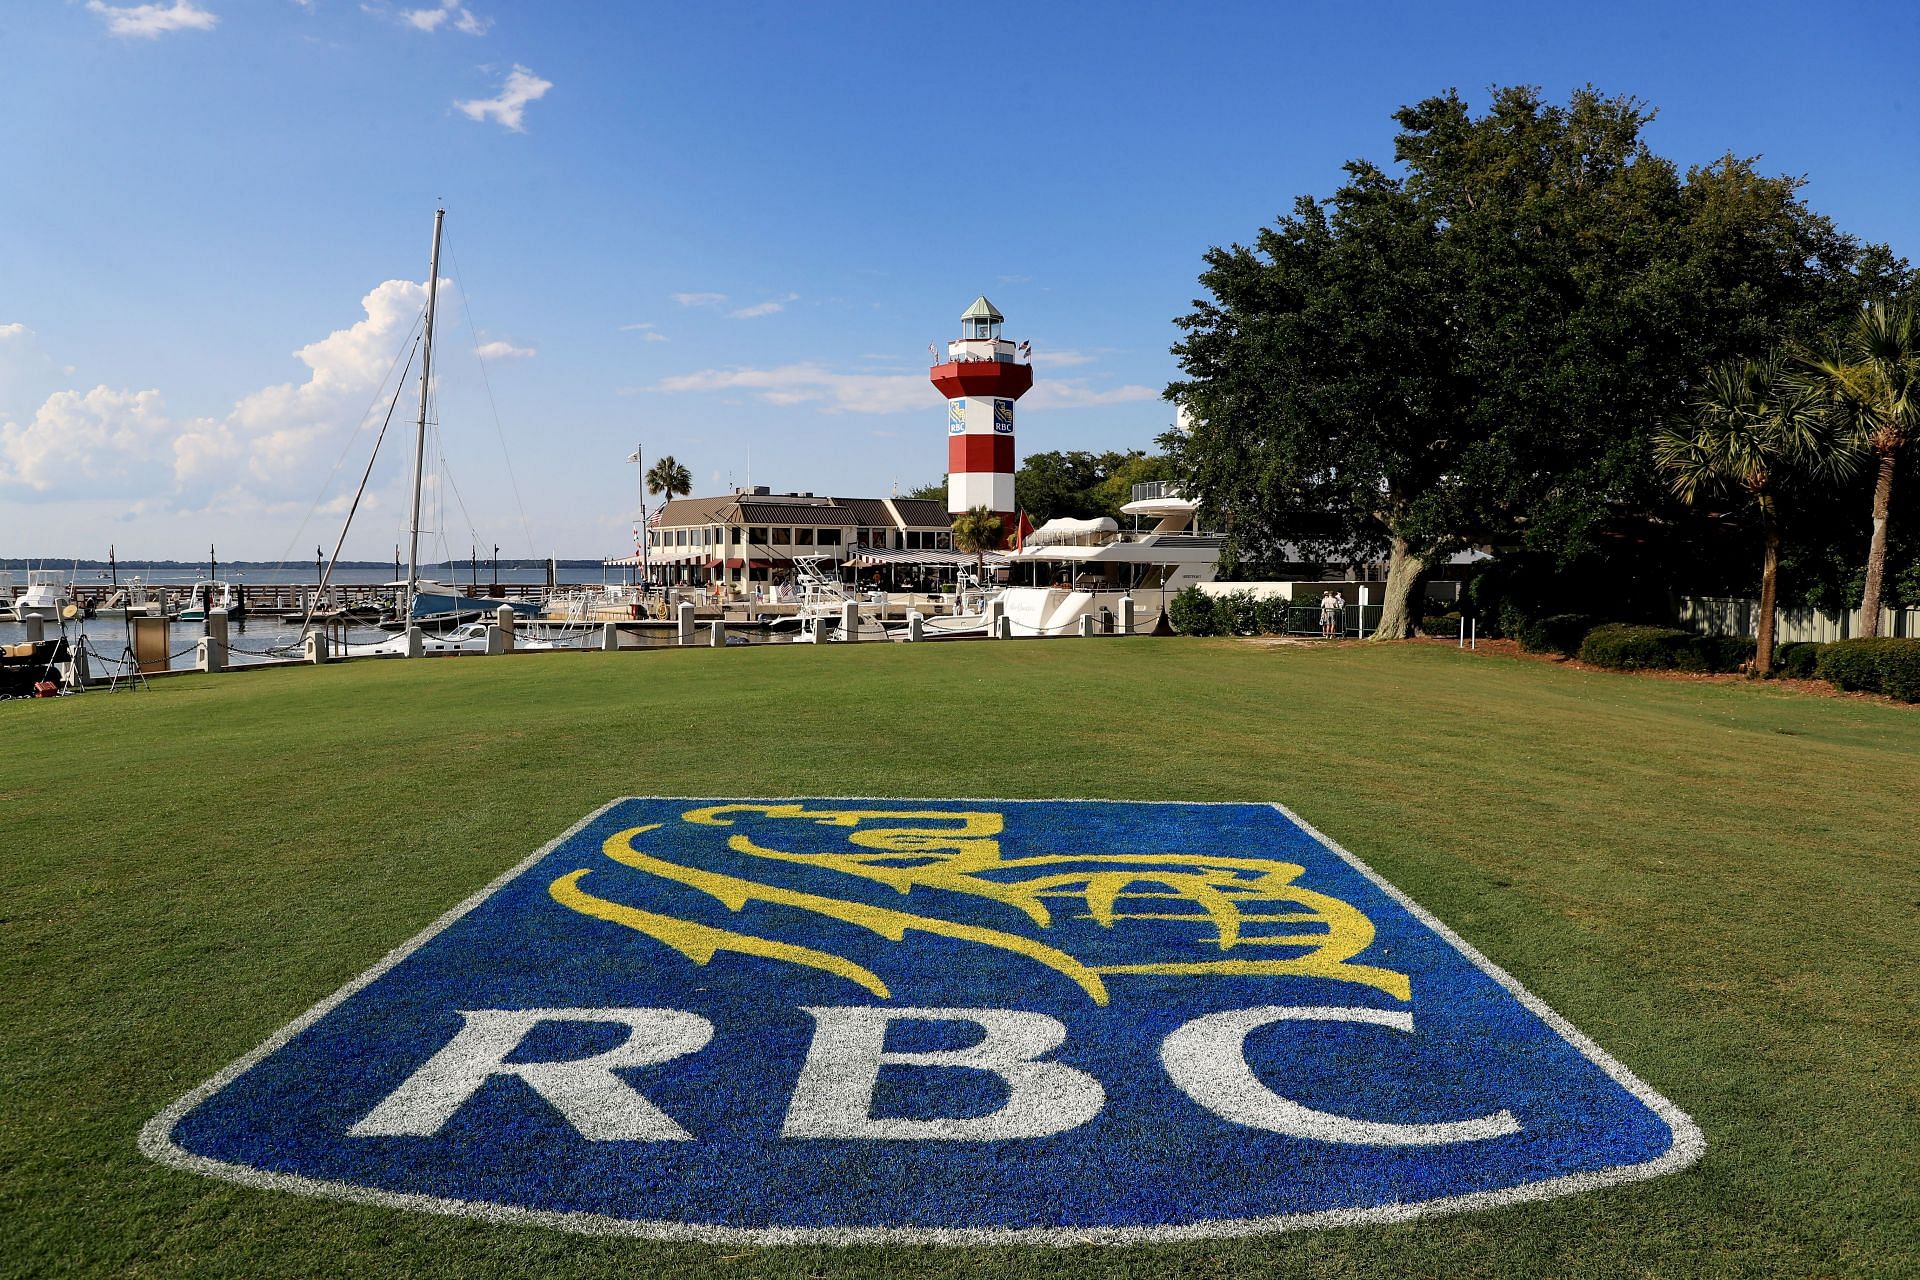 RBC Heritage will begin on Thursday, April 13